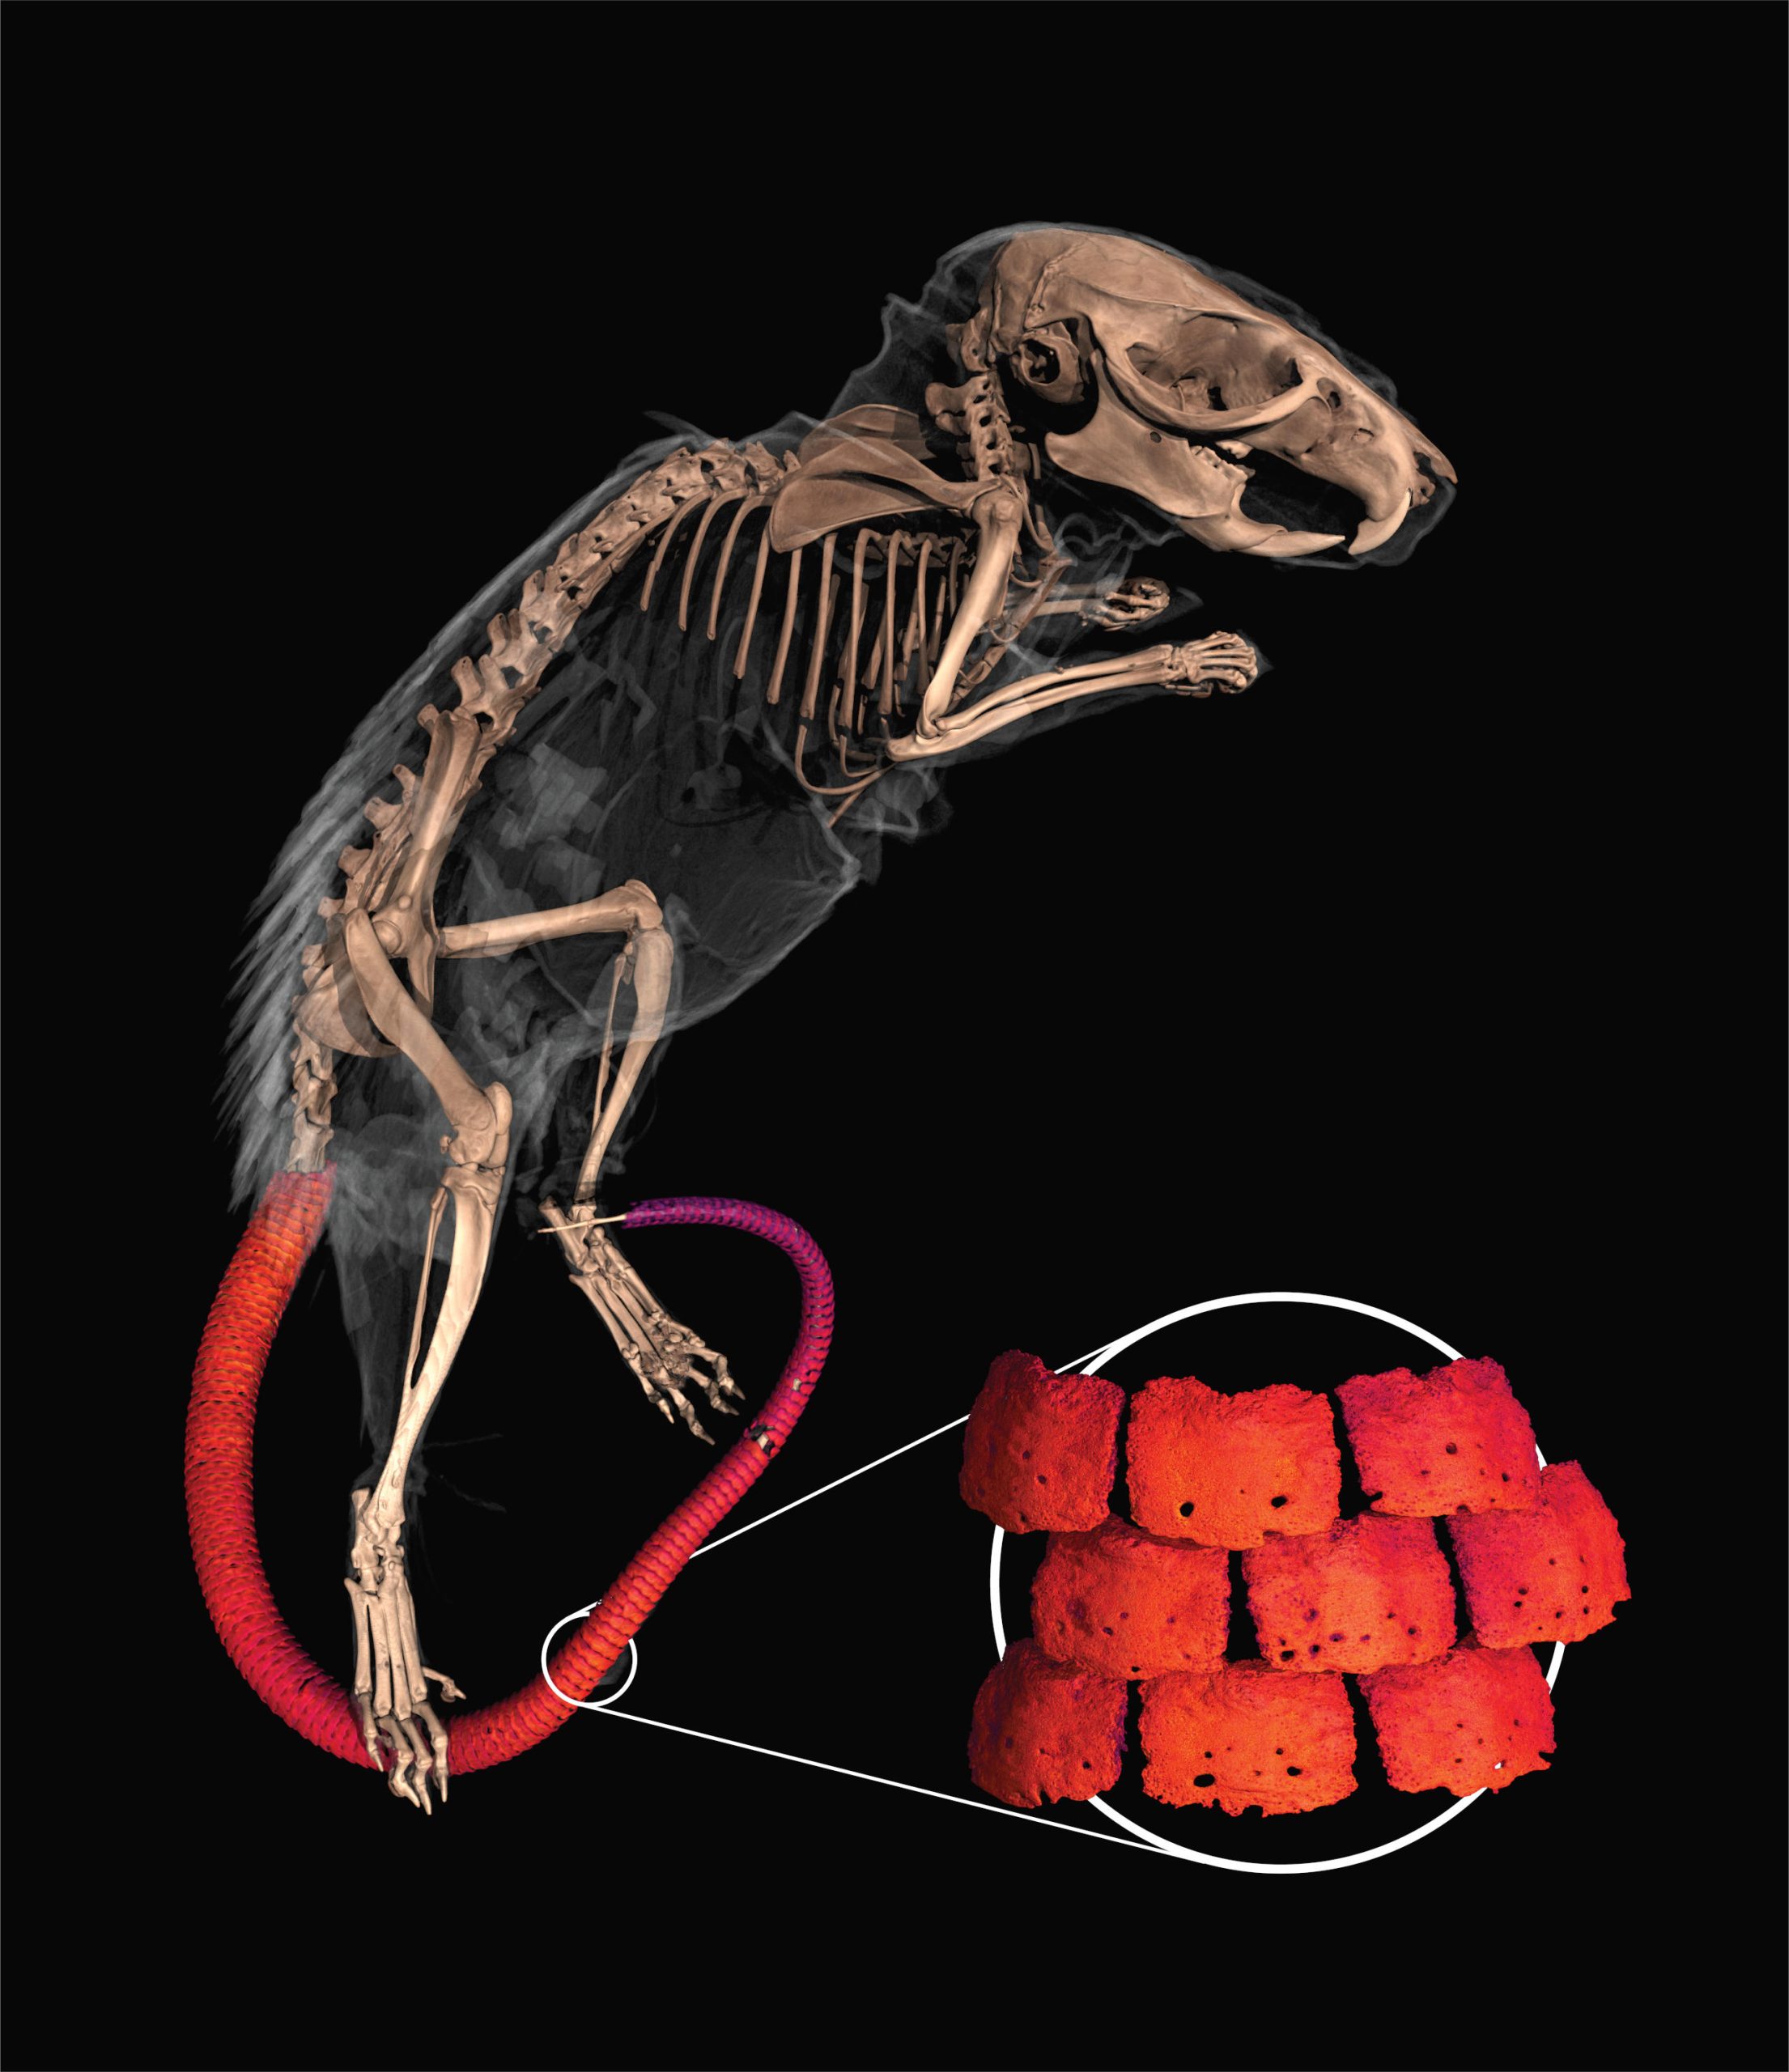 Escudo umbilical do rato espinhoso africano